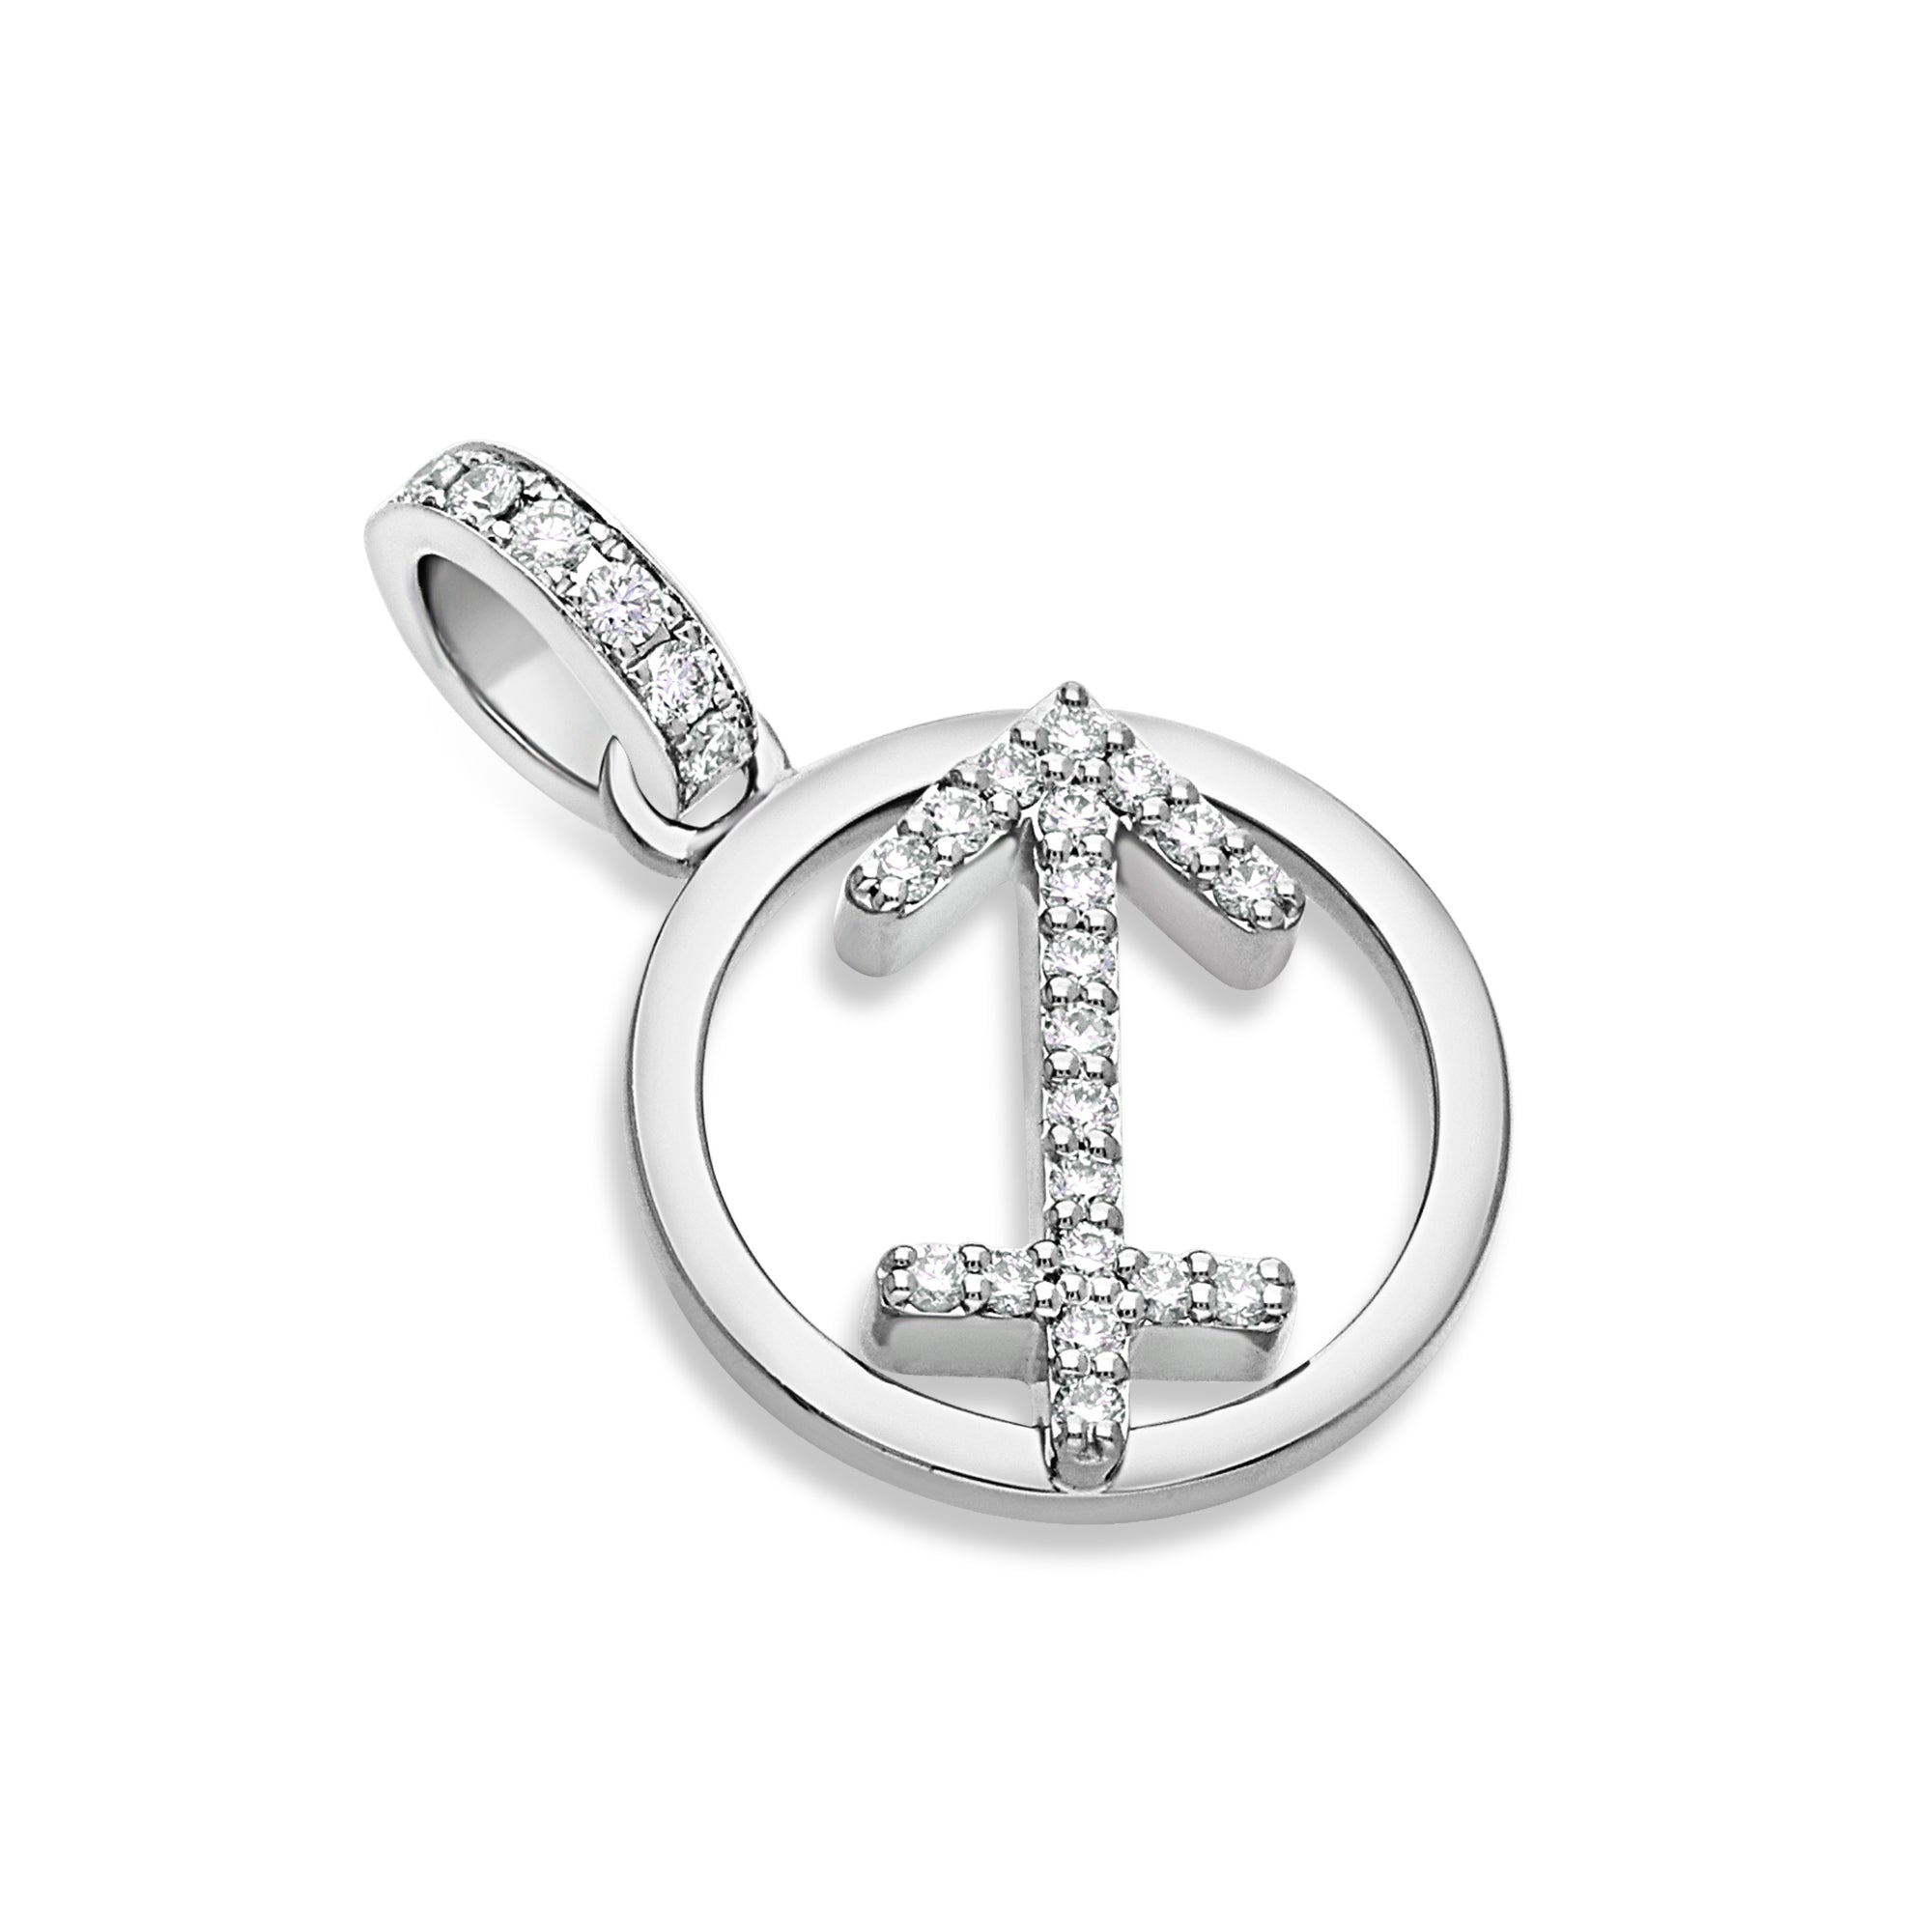 Nano Zodiac Necklace: Sagittarius (14K ROSE GOLD) - IF & Co. Custom Jewelers